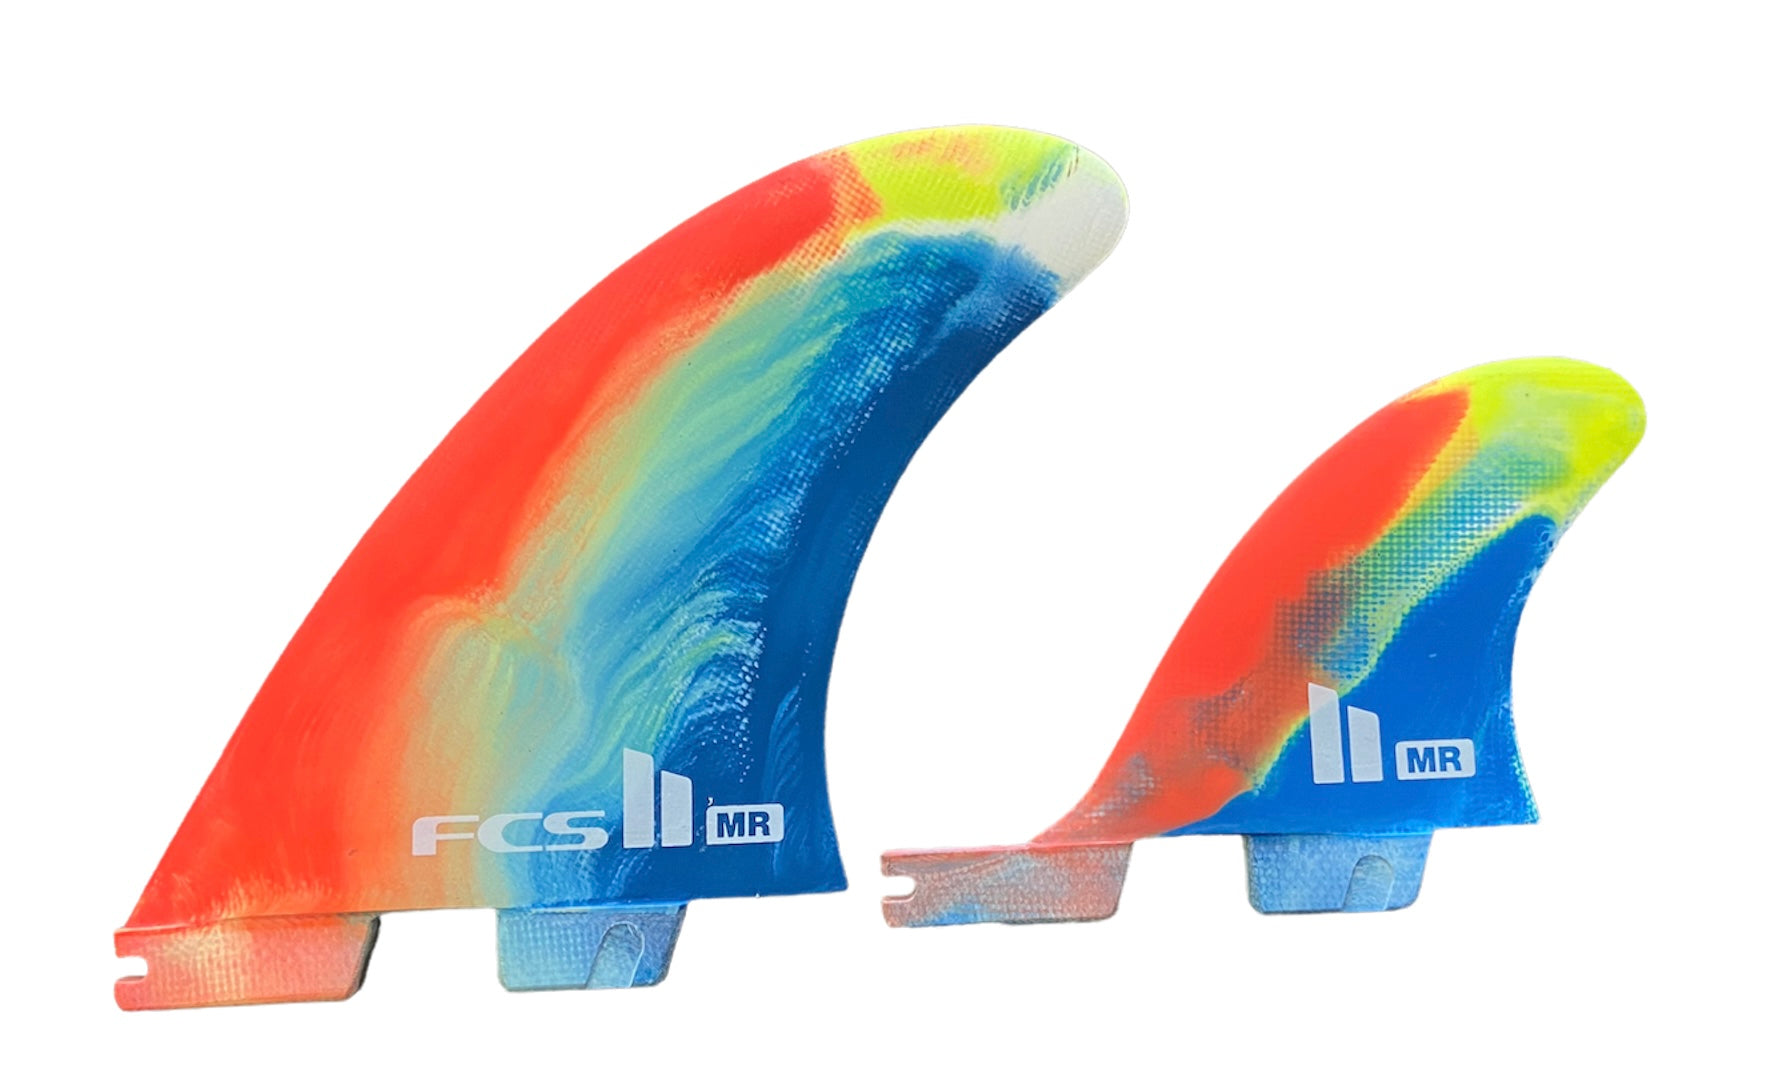 FCS II MR Twin Fins with mini Trailer- PC Tri Set Xlarge - Black White / Neon Swirl / Dusty Blue Fins